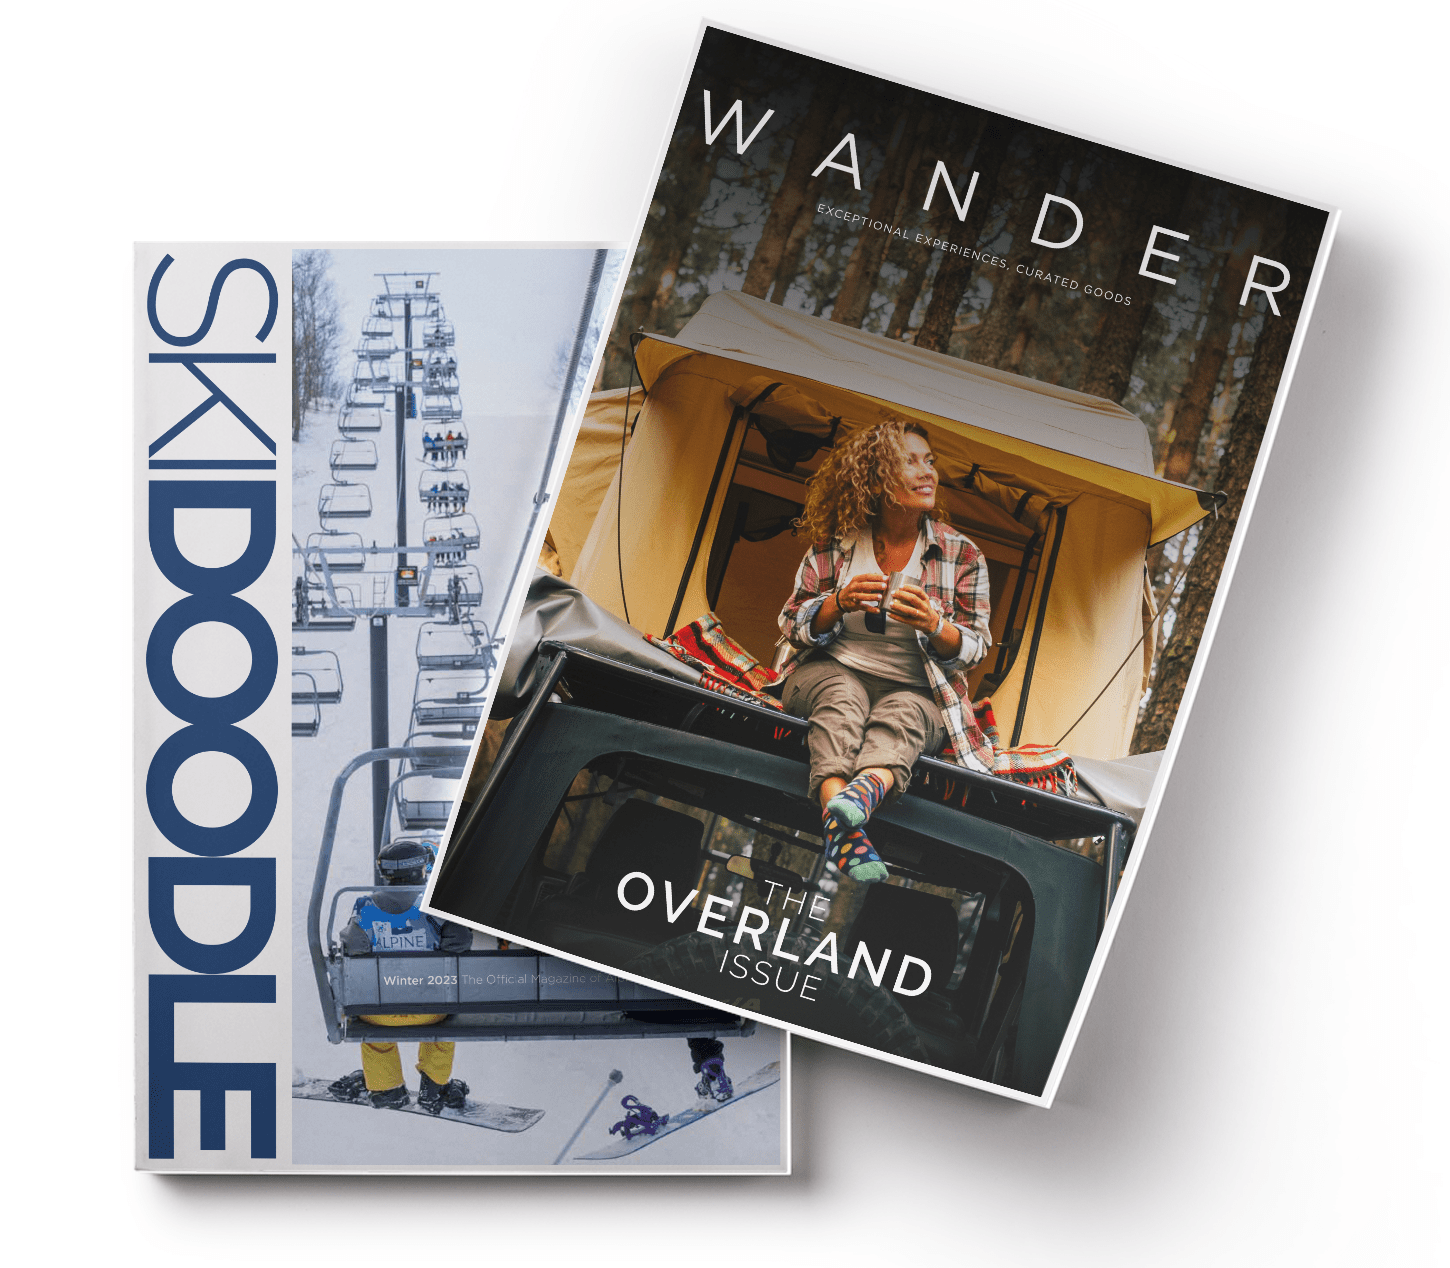 Wander Custom Magazines